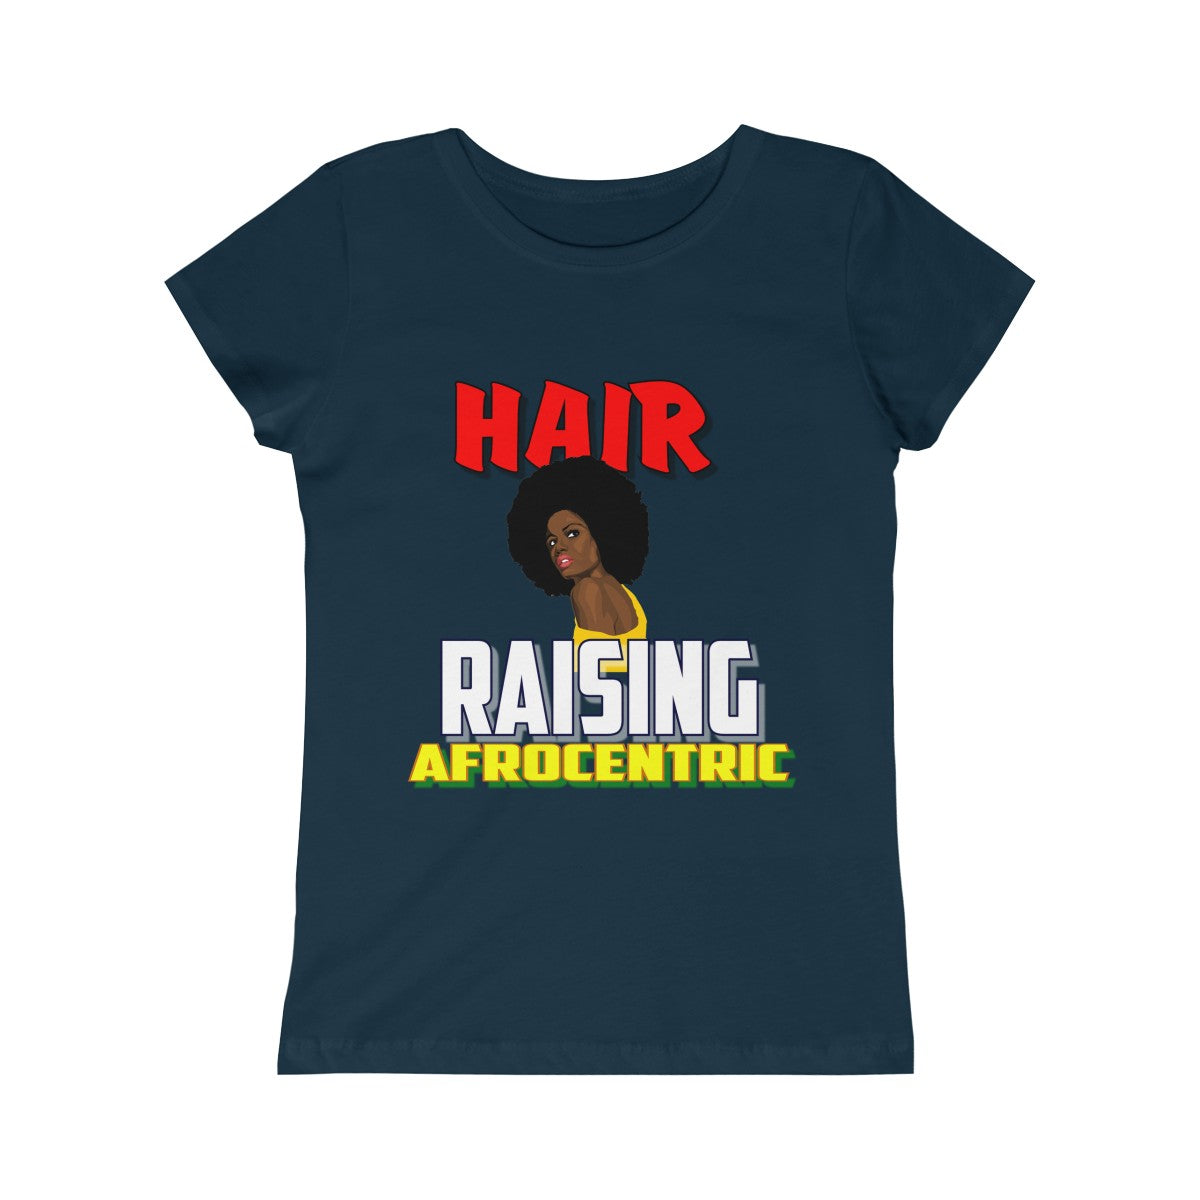 Girls Princess Tee - Hair Raising Afrocentric V